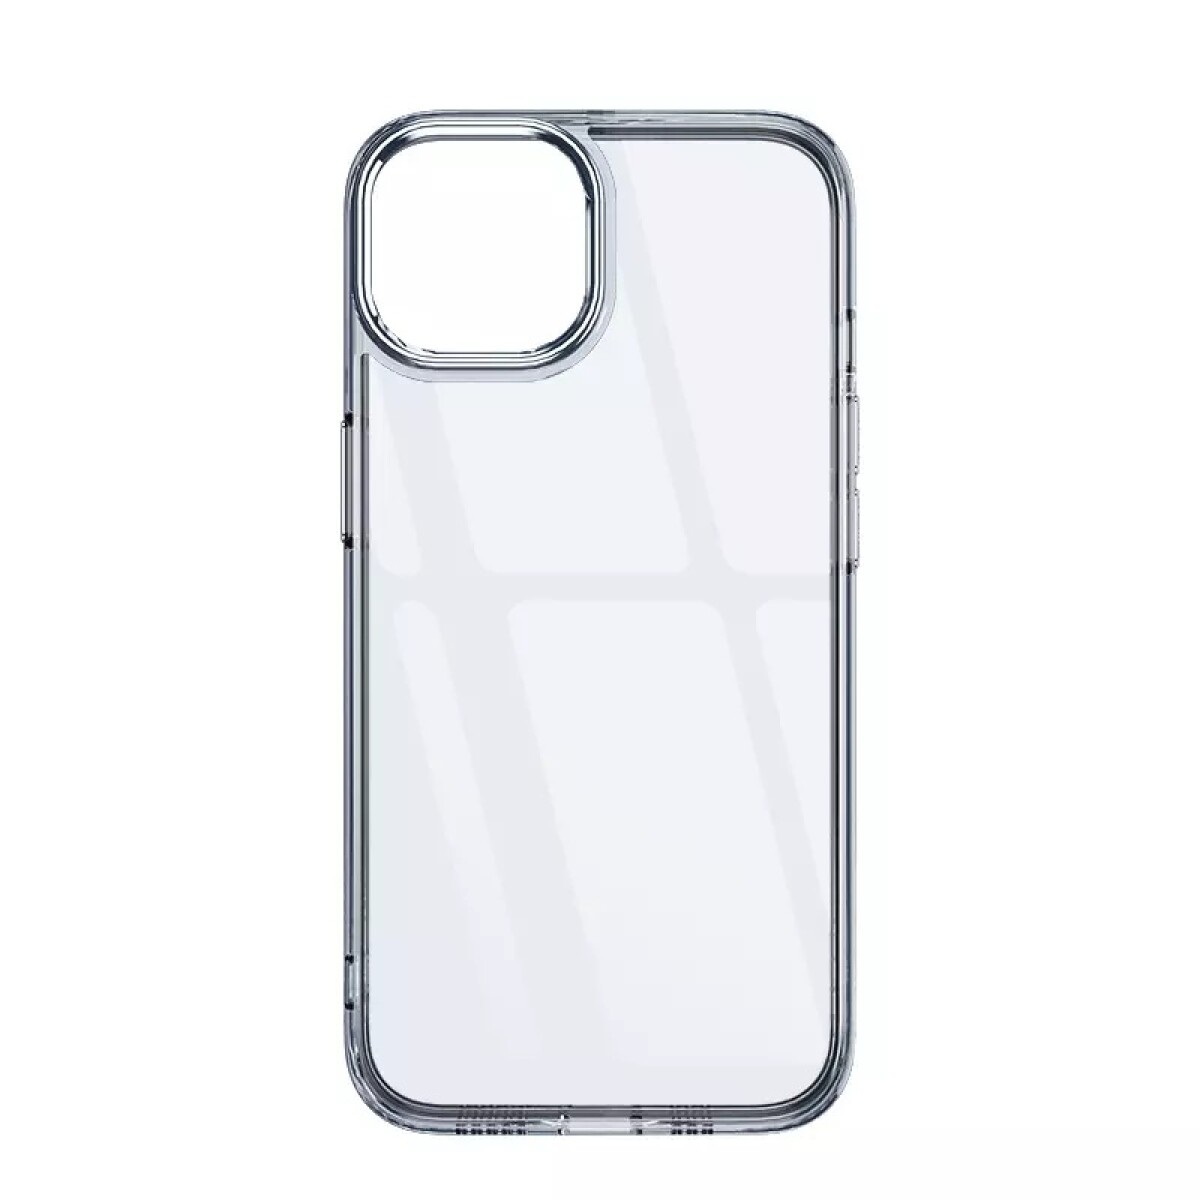 Protector case armor tpu para iphone 13 pro max - Transparente 